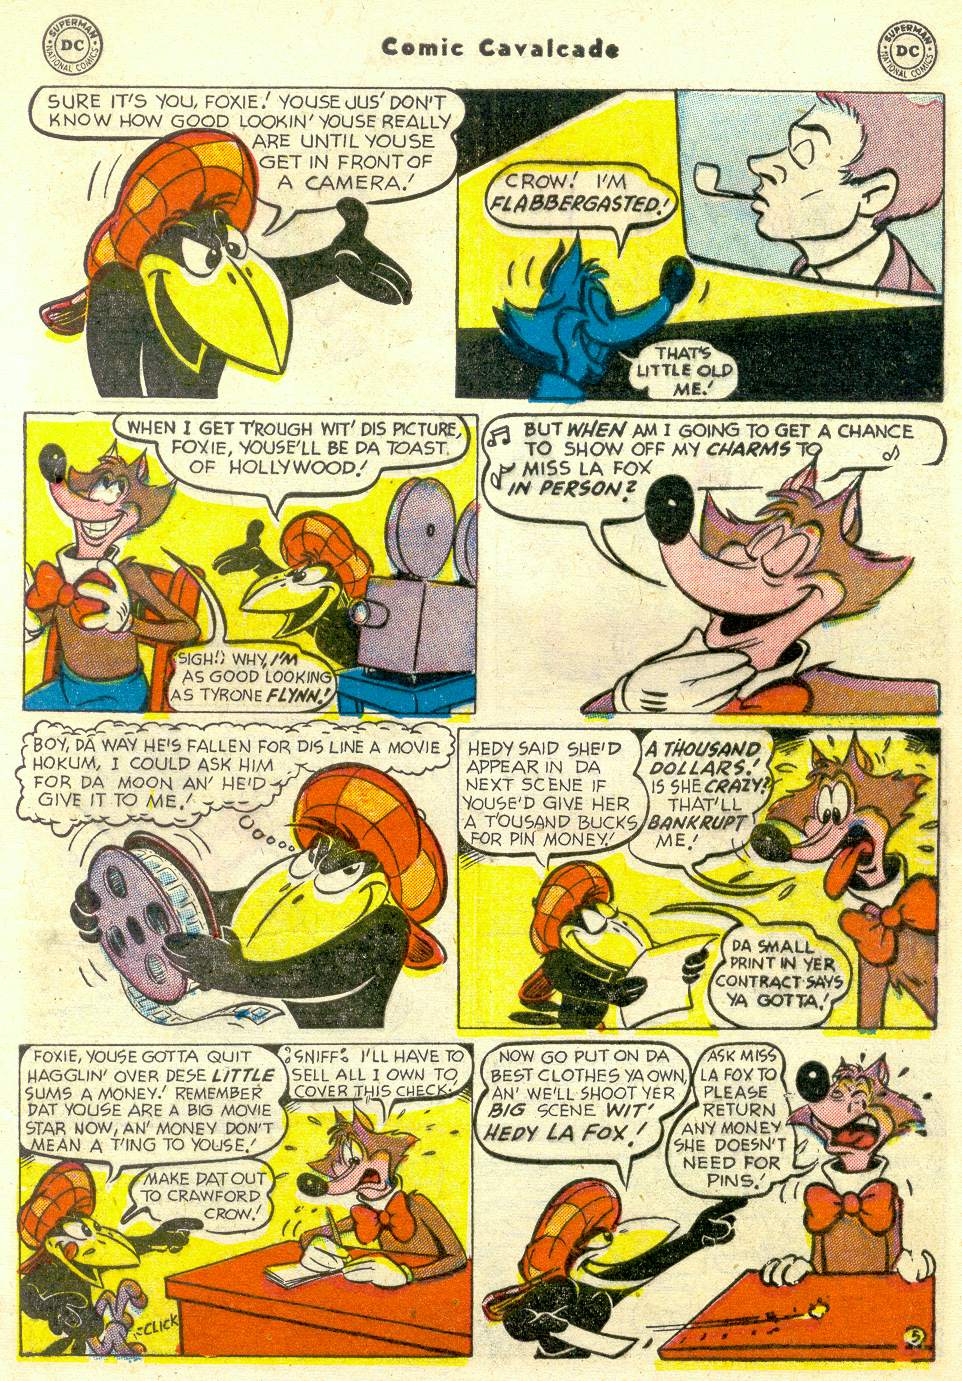 Comic Cavalcade issue 49 - Page 7